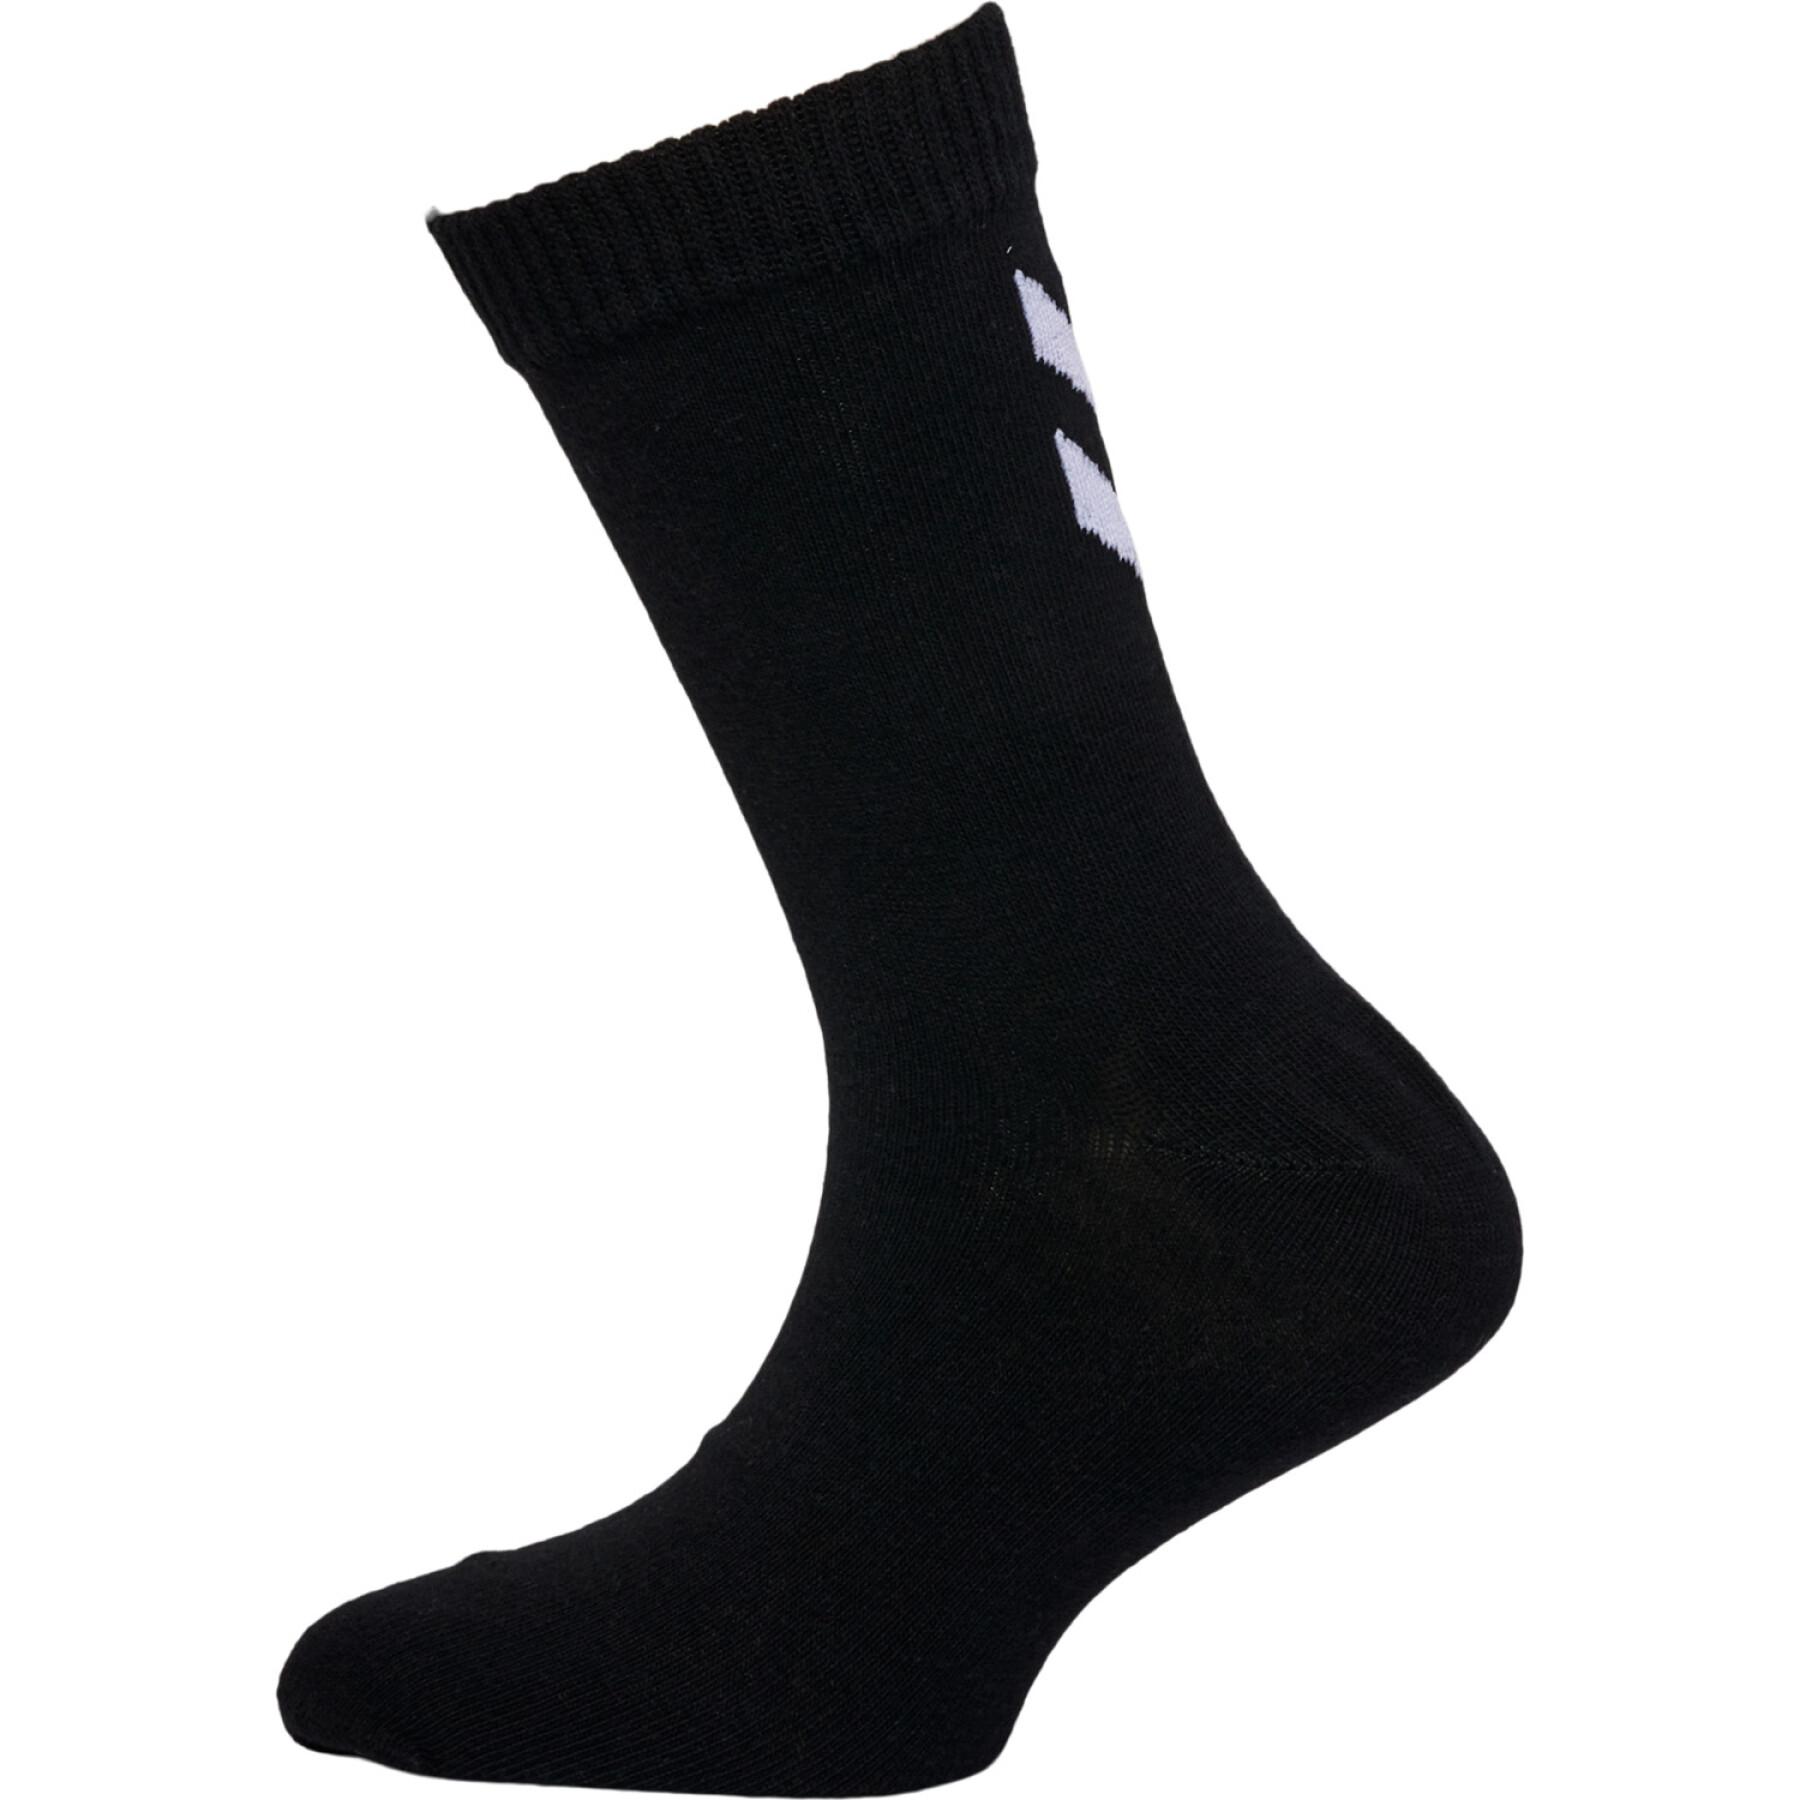 Children's socks Hummel Make My Day (x5)